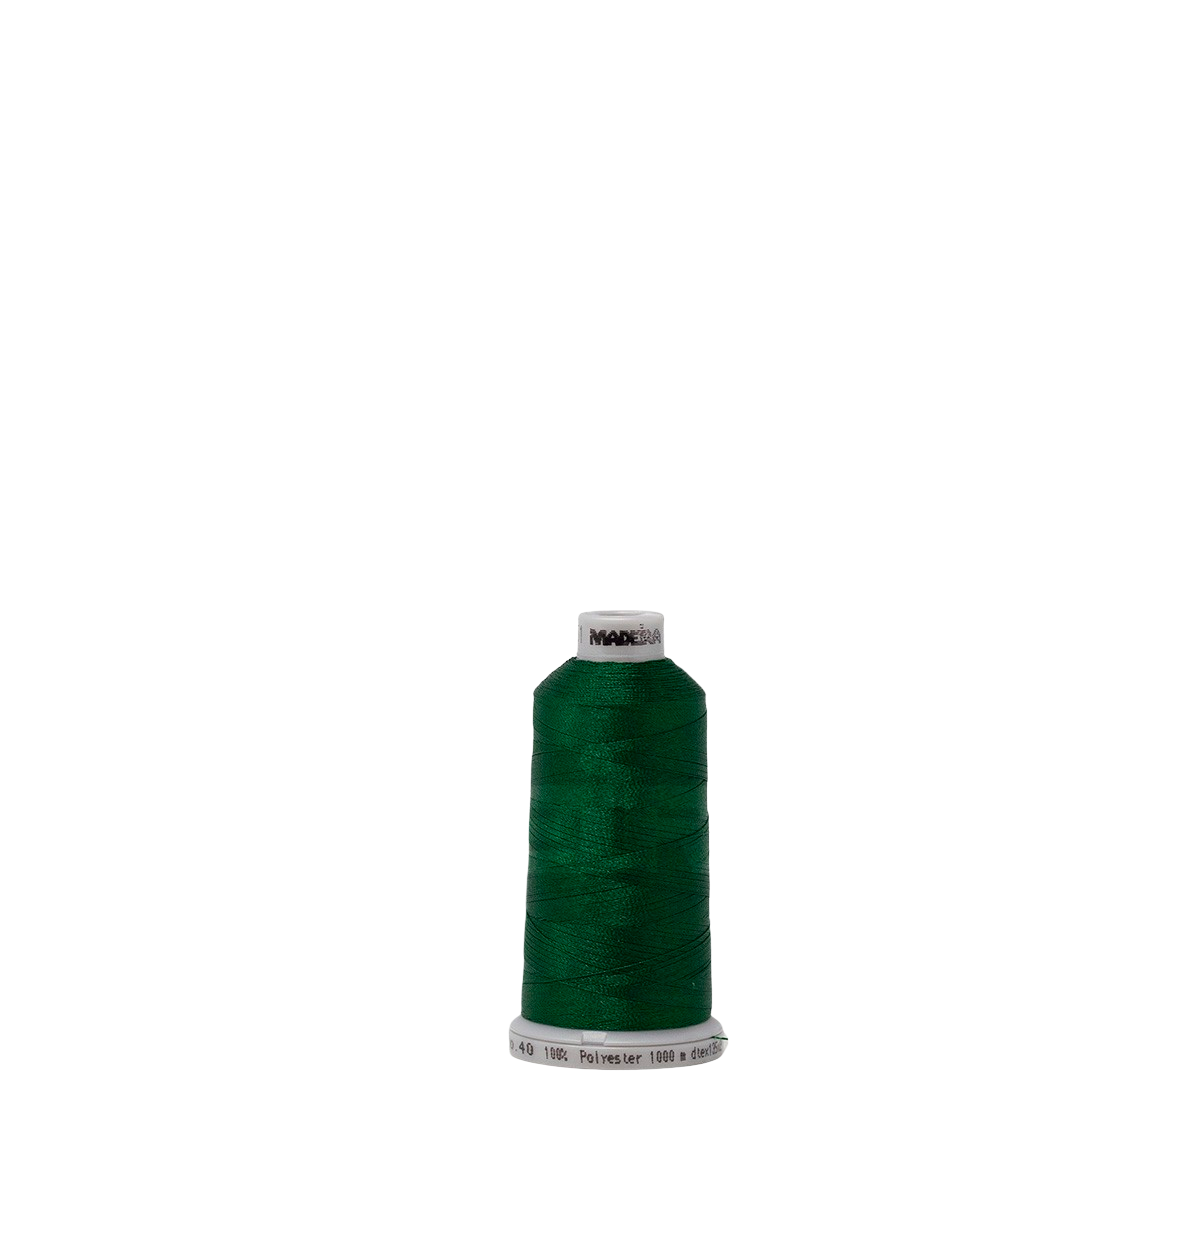 Cadmium Green 1851 #40 Weight Madeira Polyneon Thread